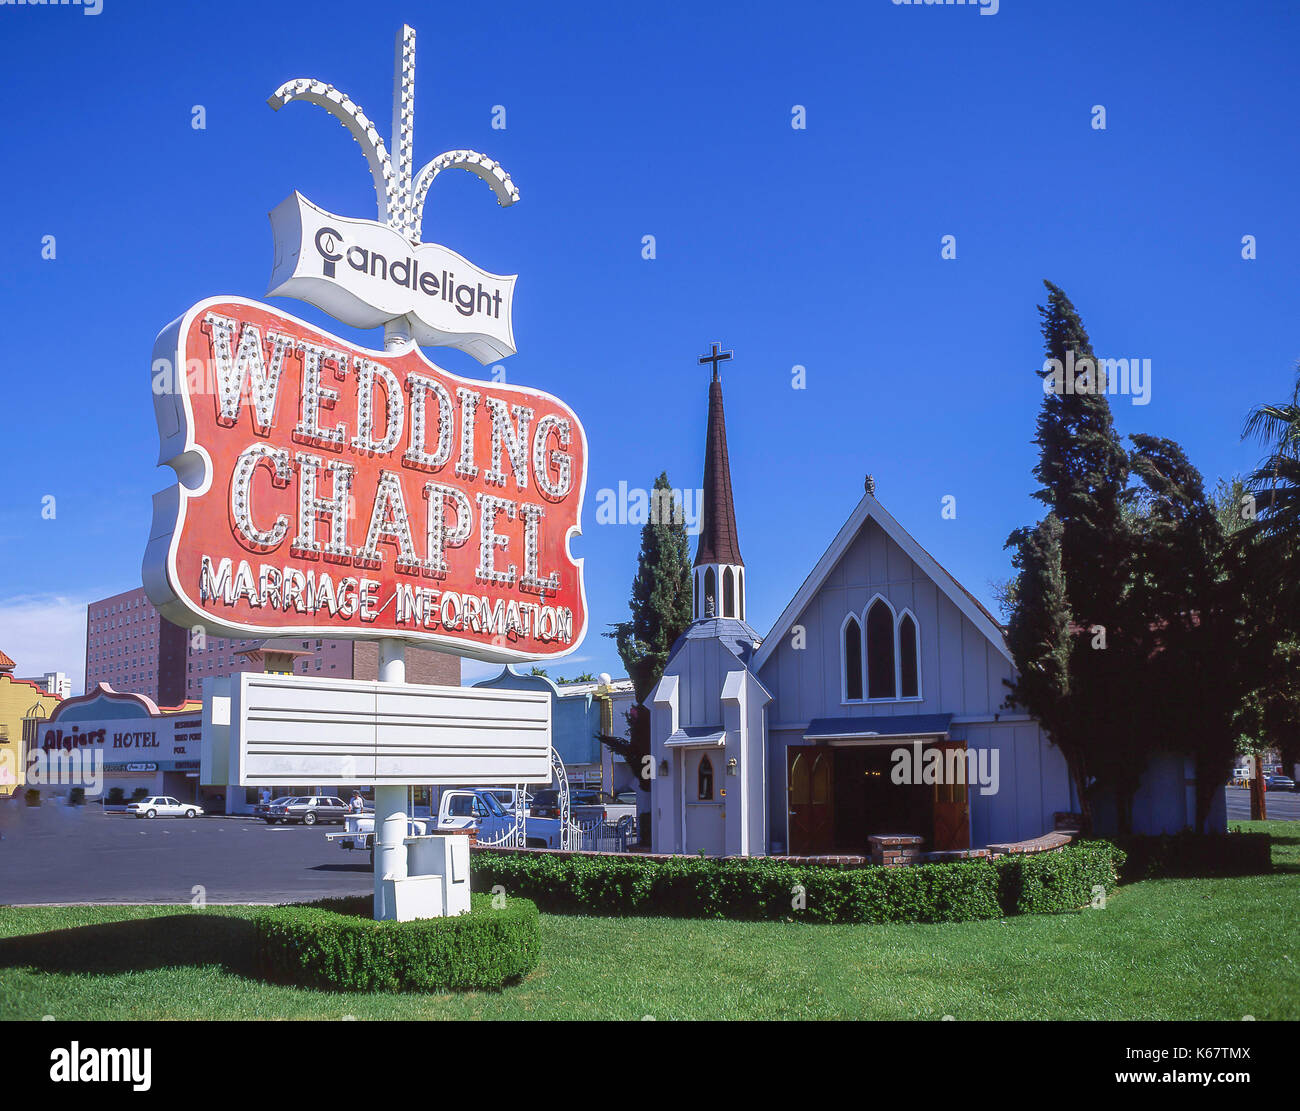 Candlelight Wedding Chapel, Las Vegas Boulevard, Las Vegas, Nevada, Vereinigte Staaten von Amerika Stockfoto